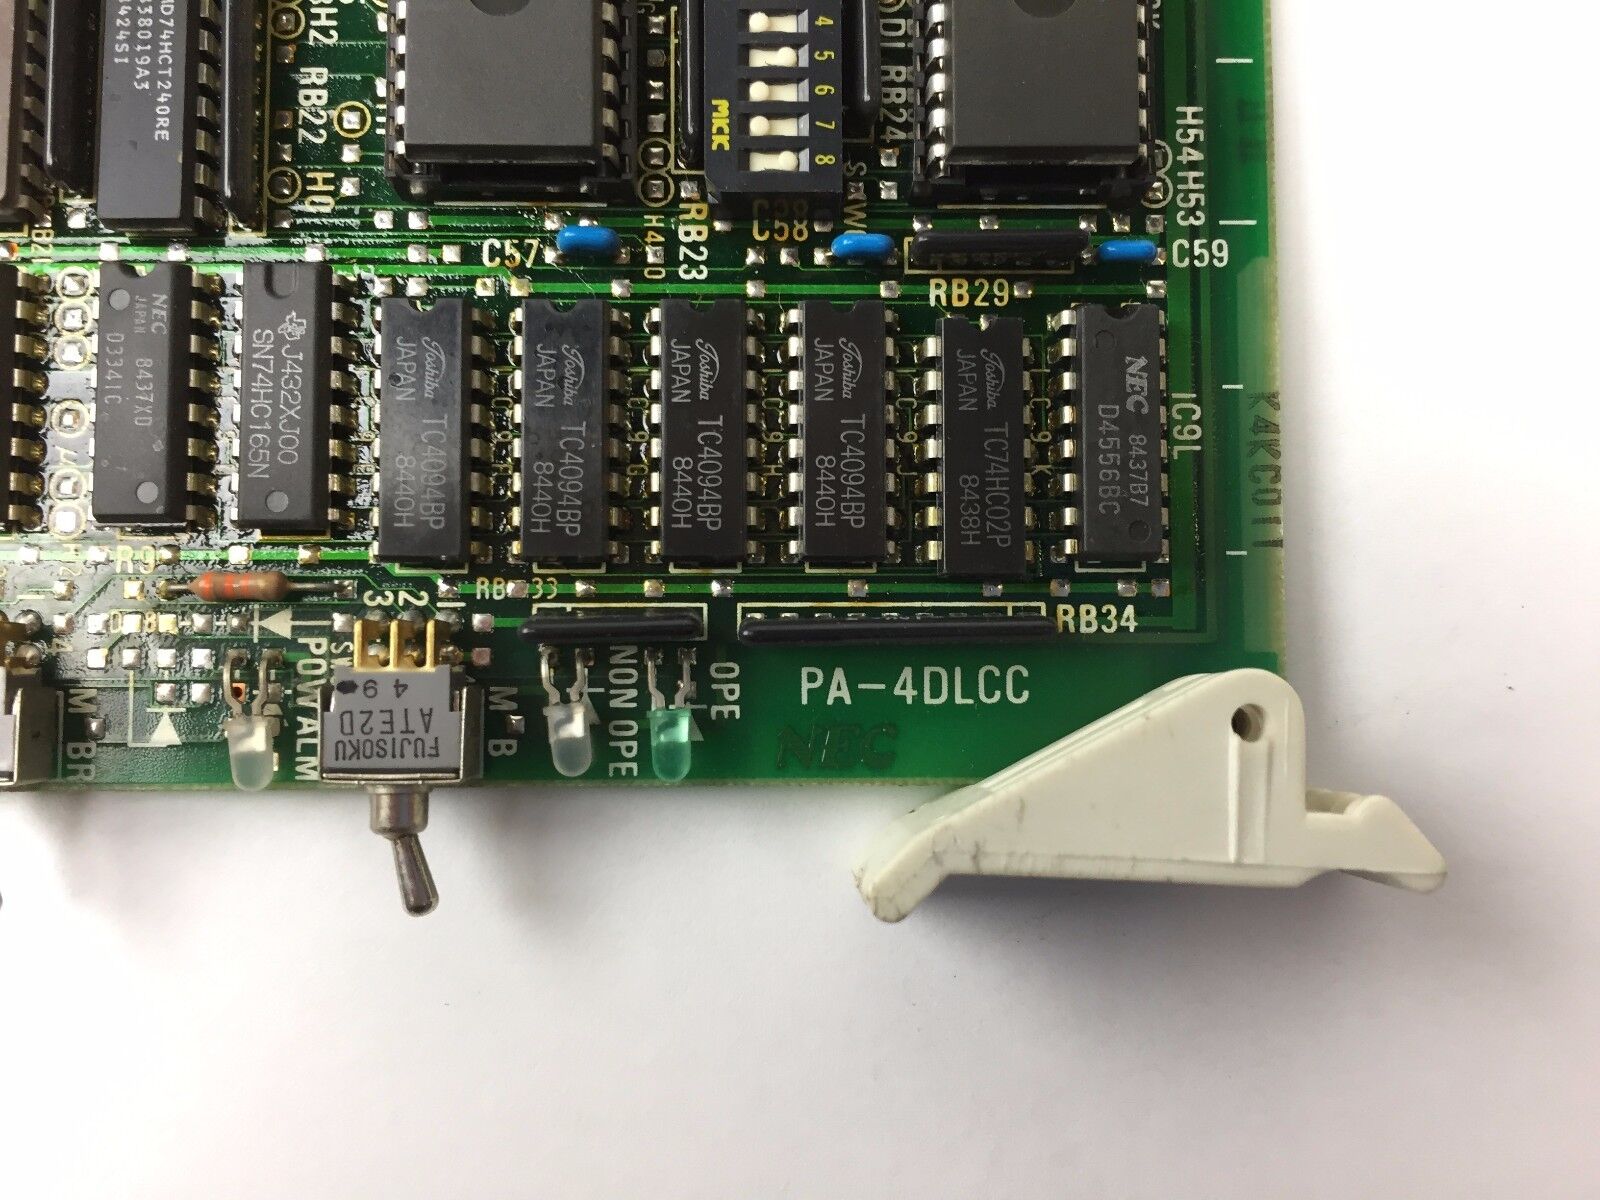 NEC NEAX 2400 PA-4DLCC Digital Line Circuit Card